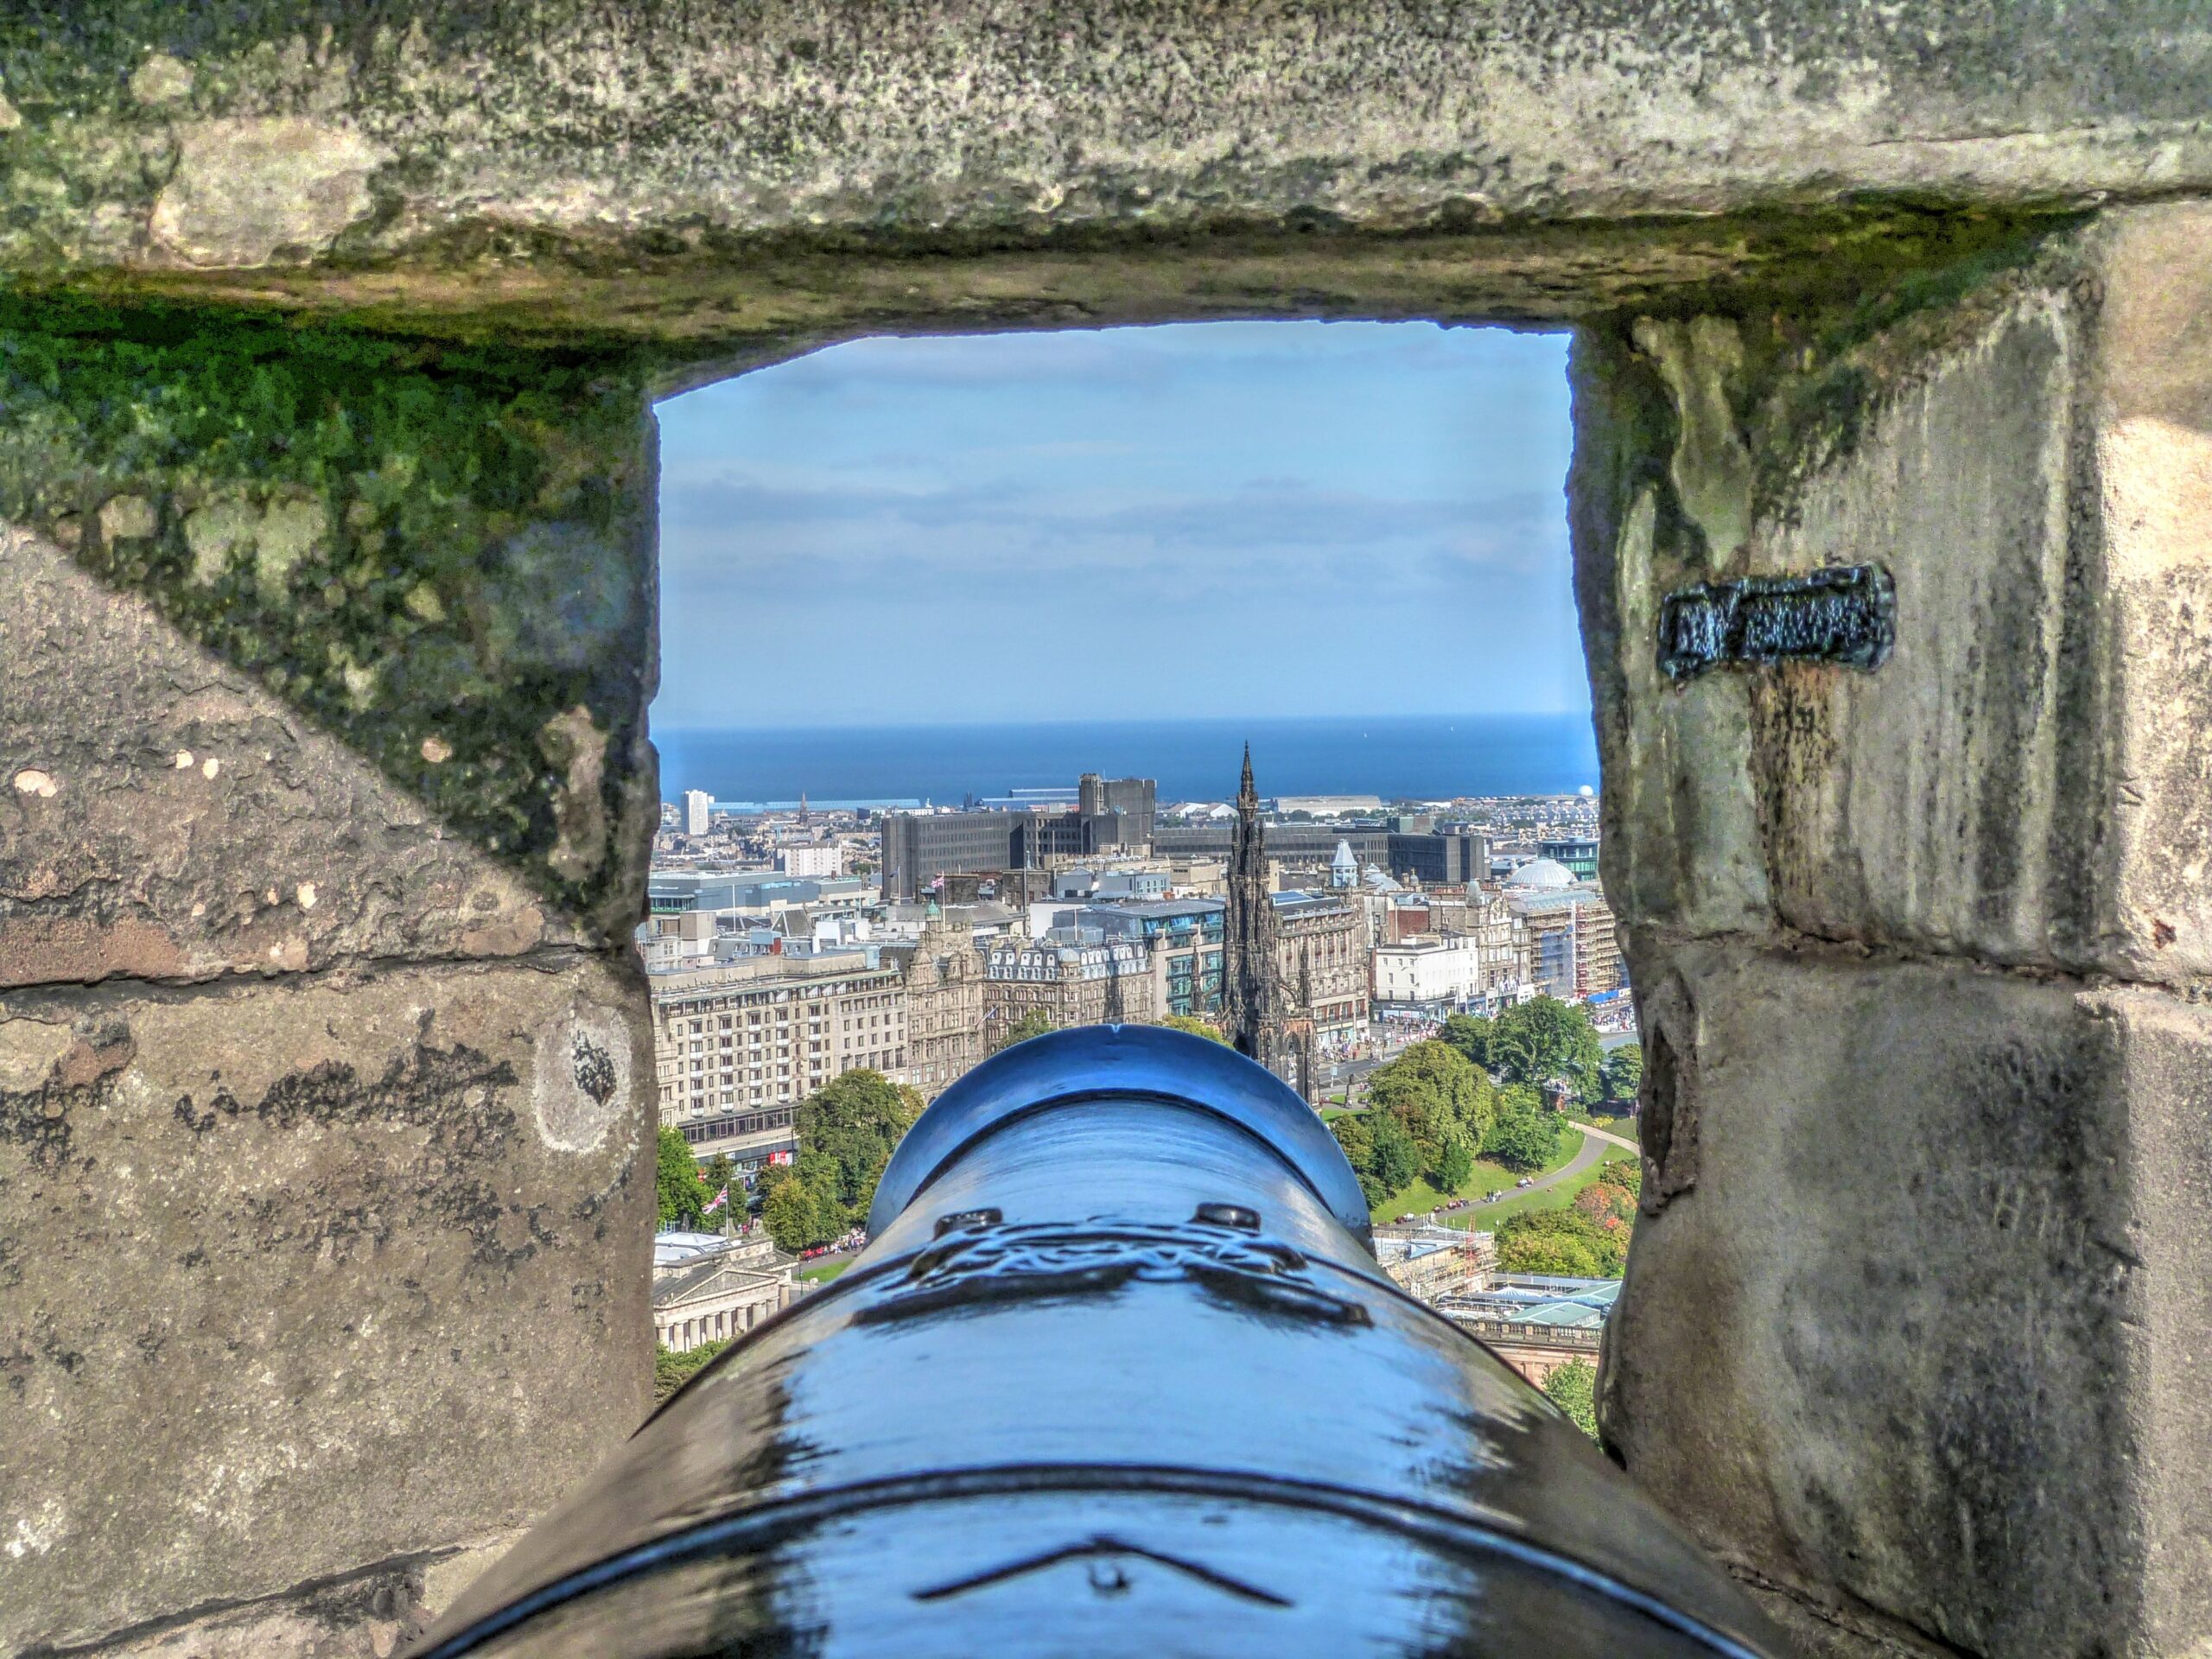 Edinburgh seen through gun port of castle